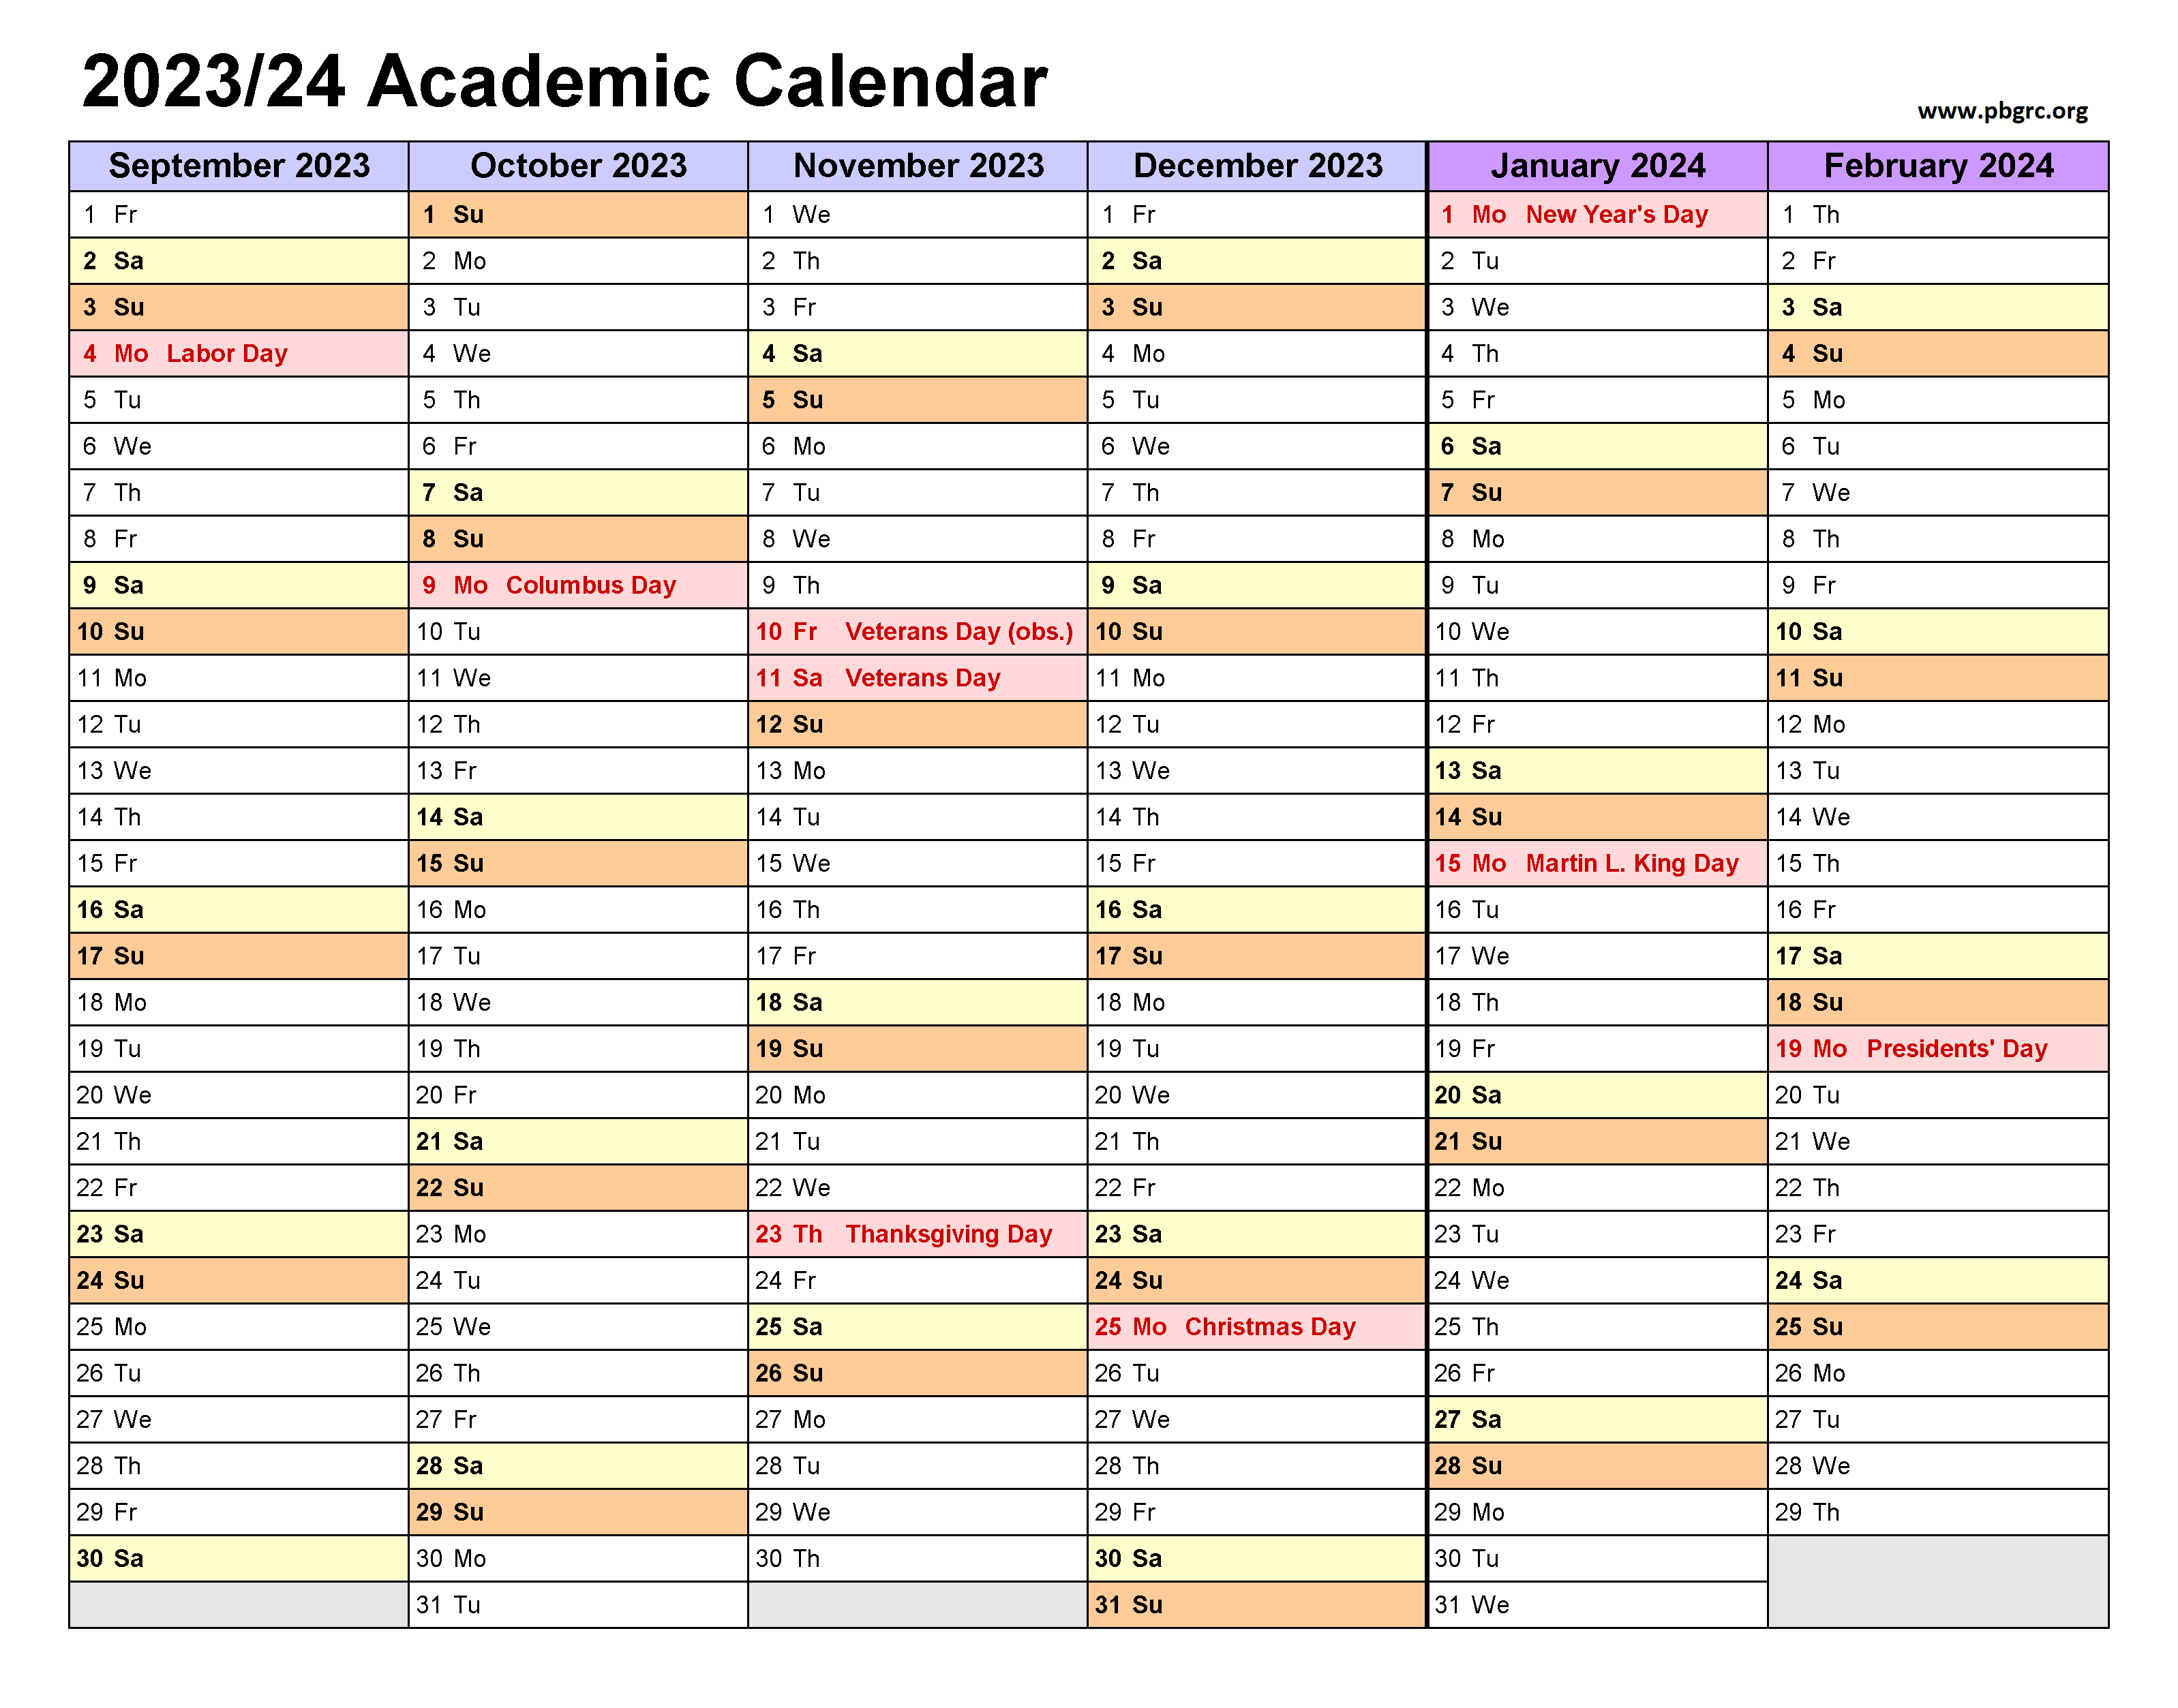 Free Printable Academic Calendar 2023 to 2024